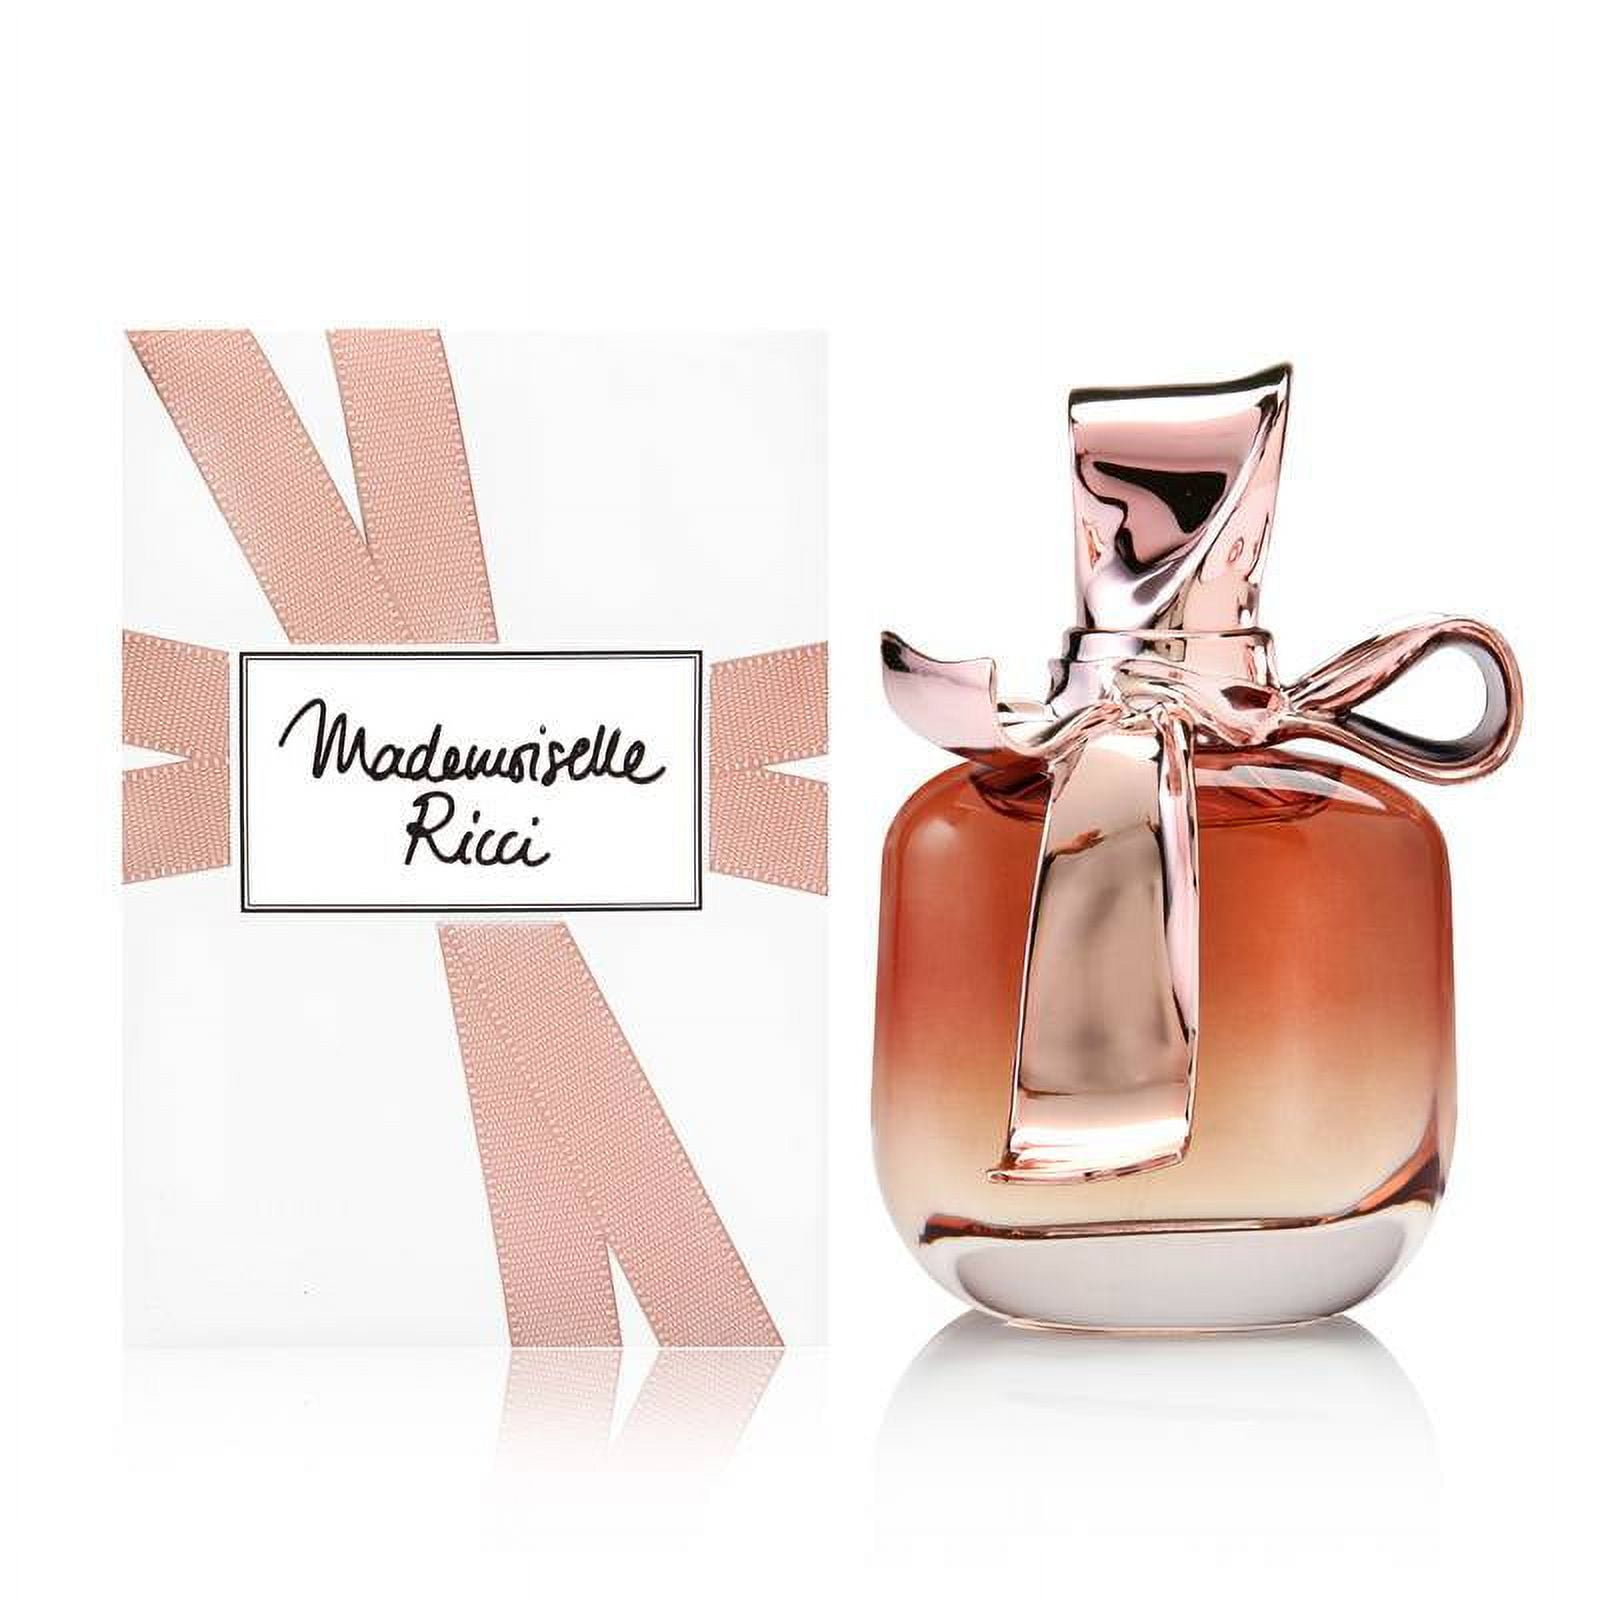 Nina Ricci Mademoiselle Ricci Eau de Parfum, Perfume for Women, 2.7 Oz ...